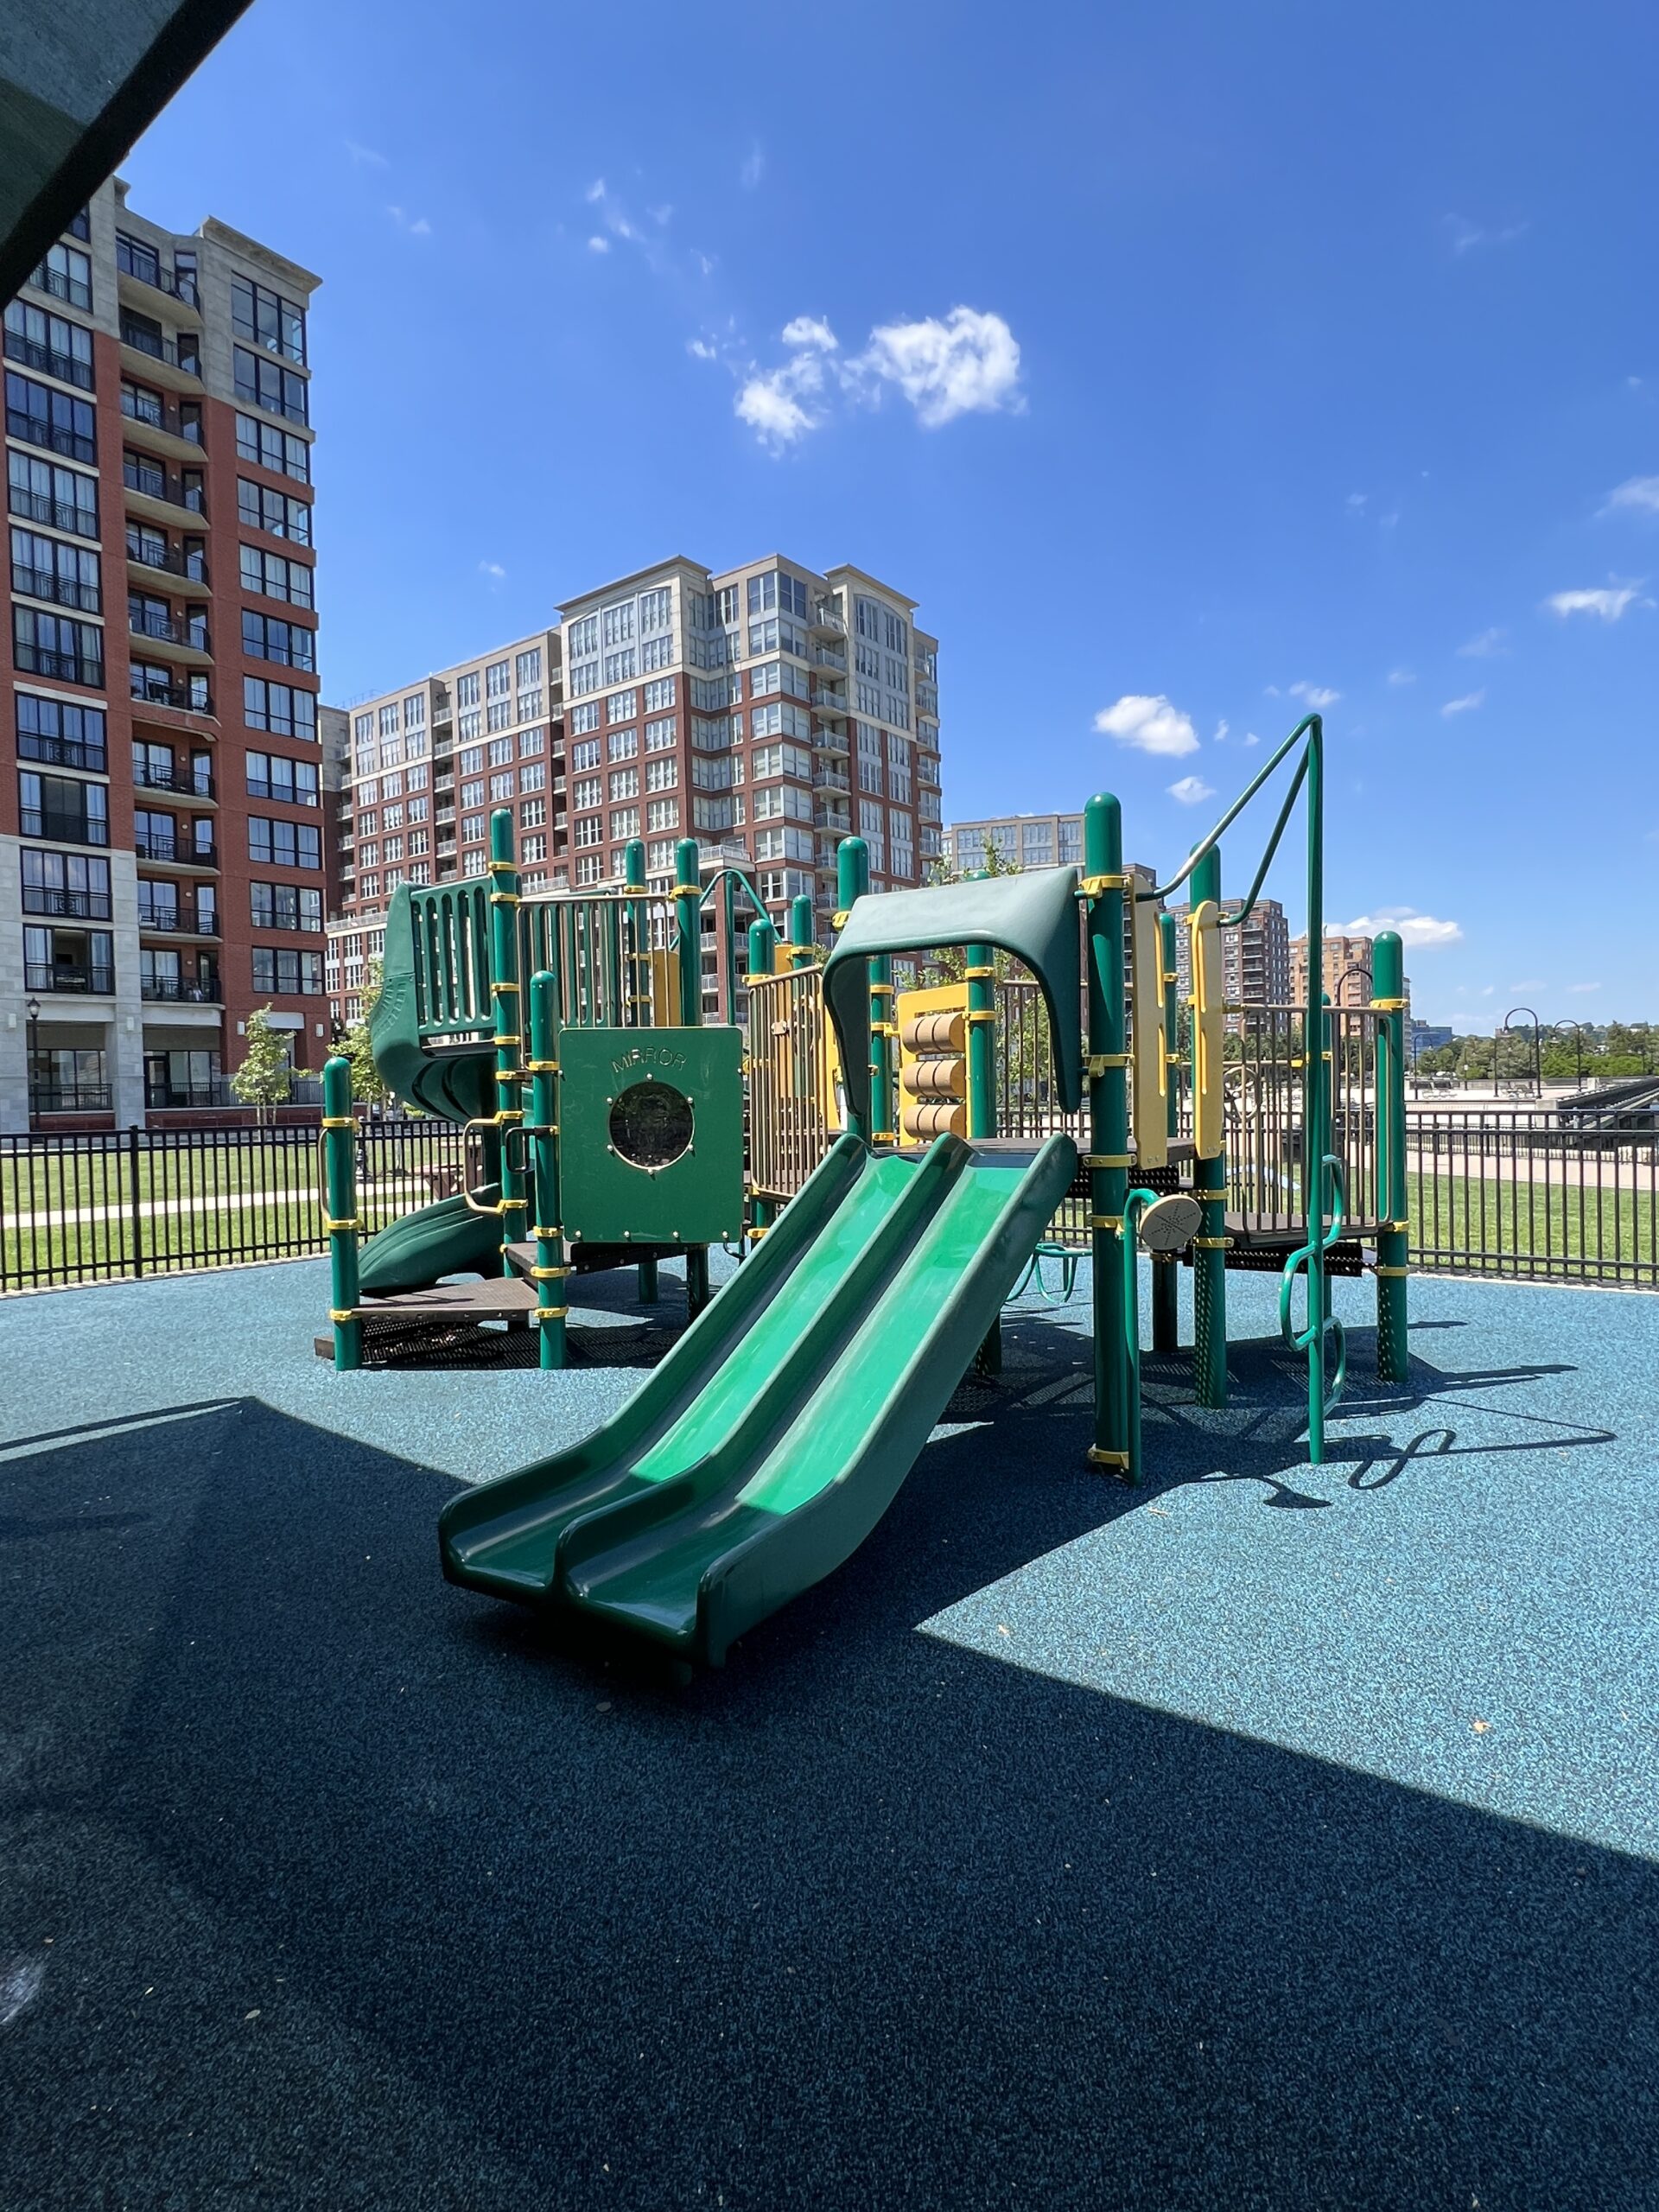 Maxwell Place Park Playground in Hoboken NJ - SLIDE - side by side slide